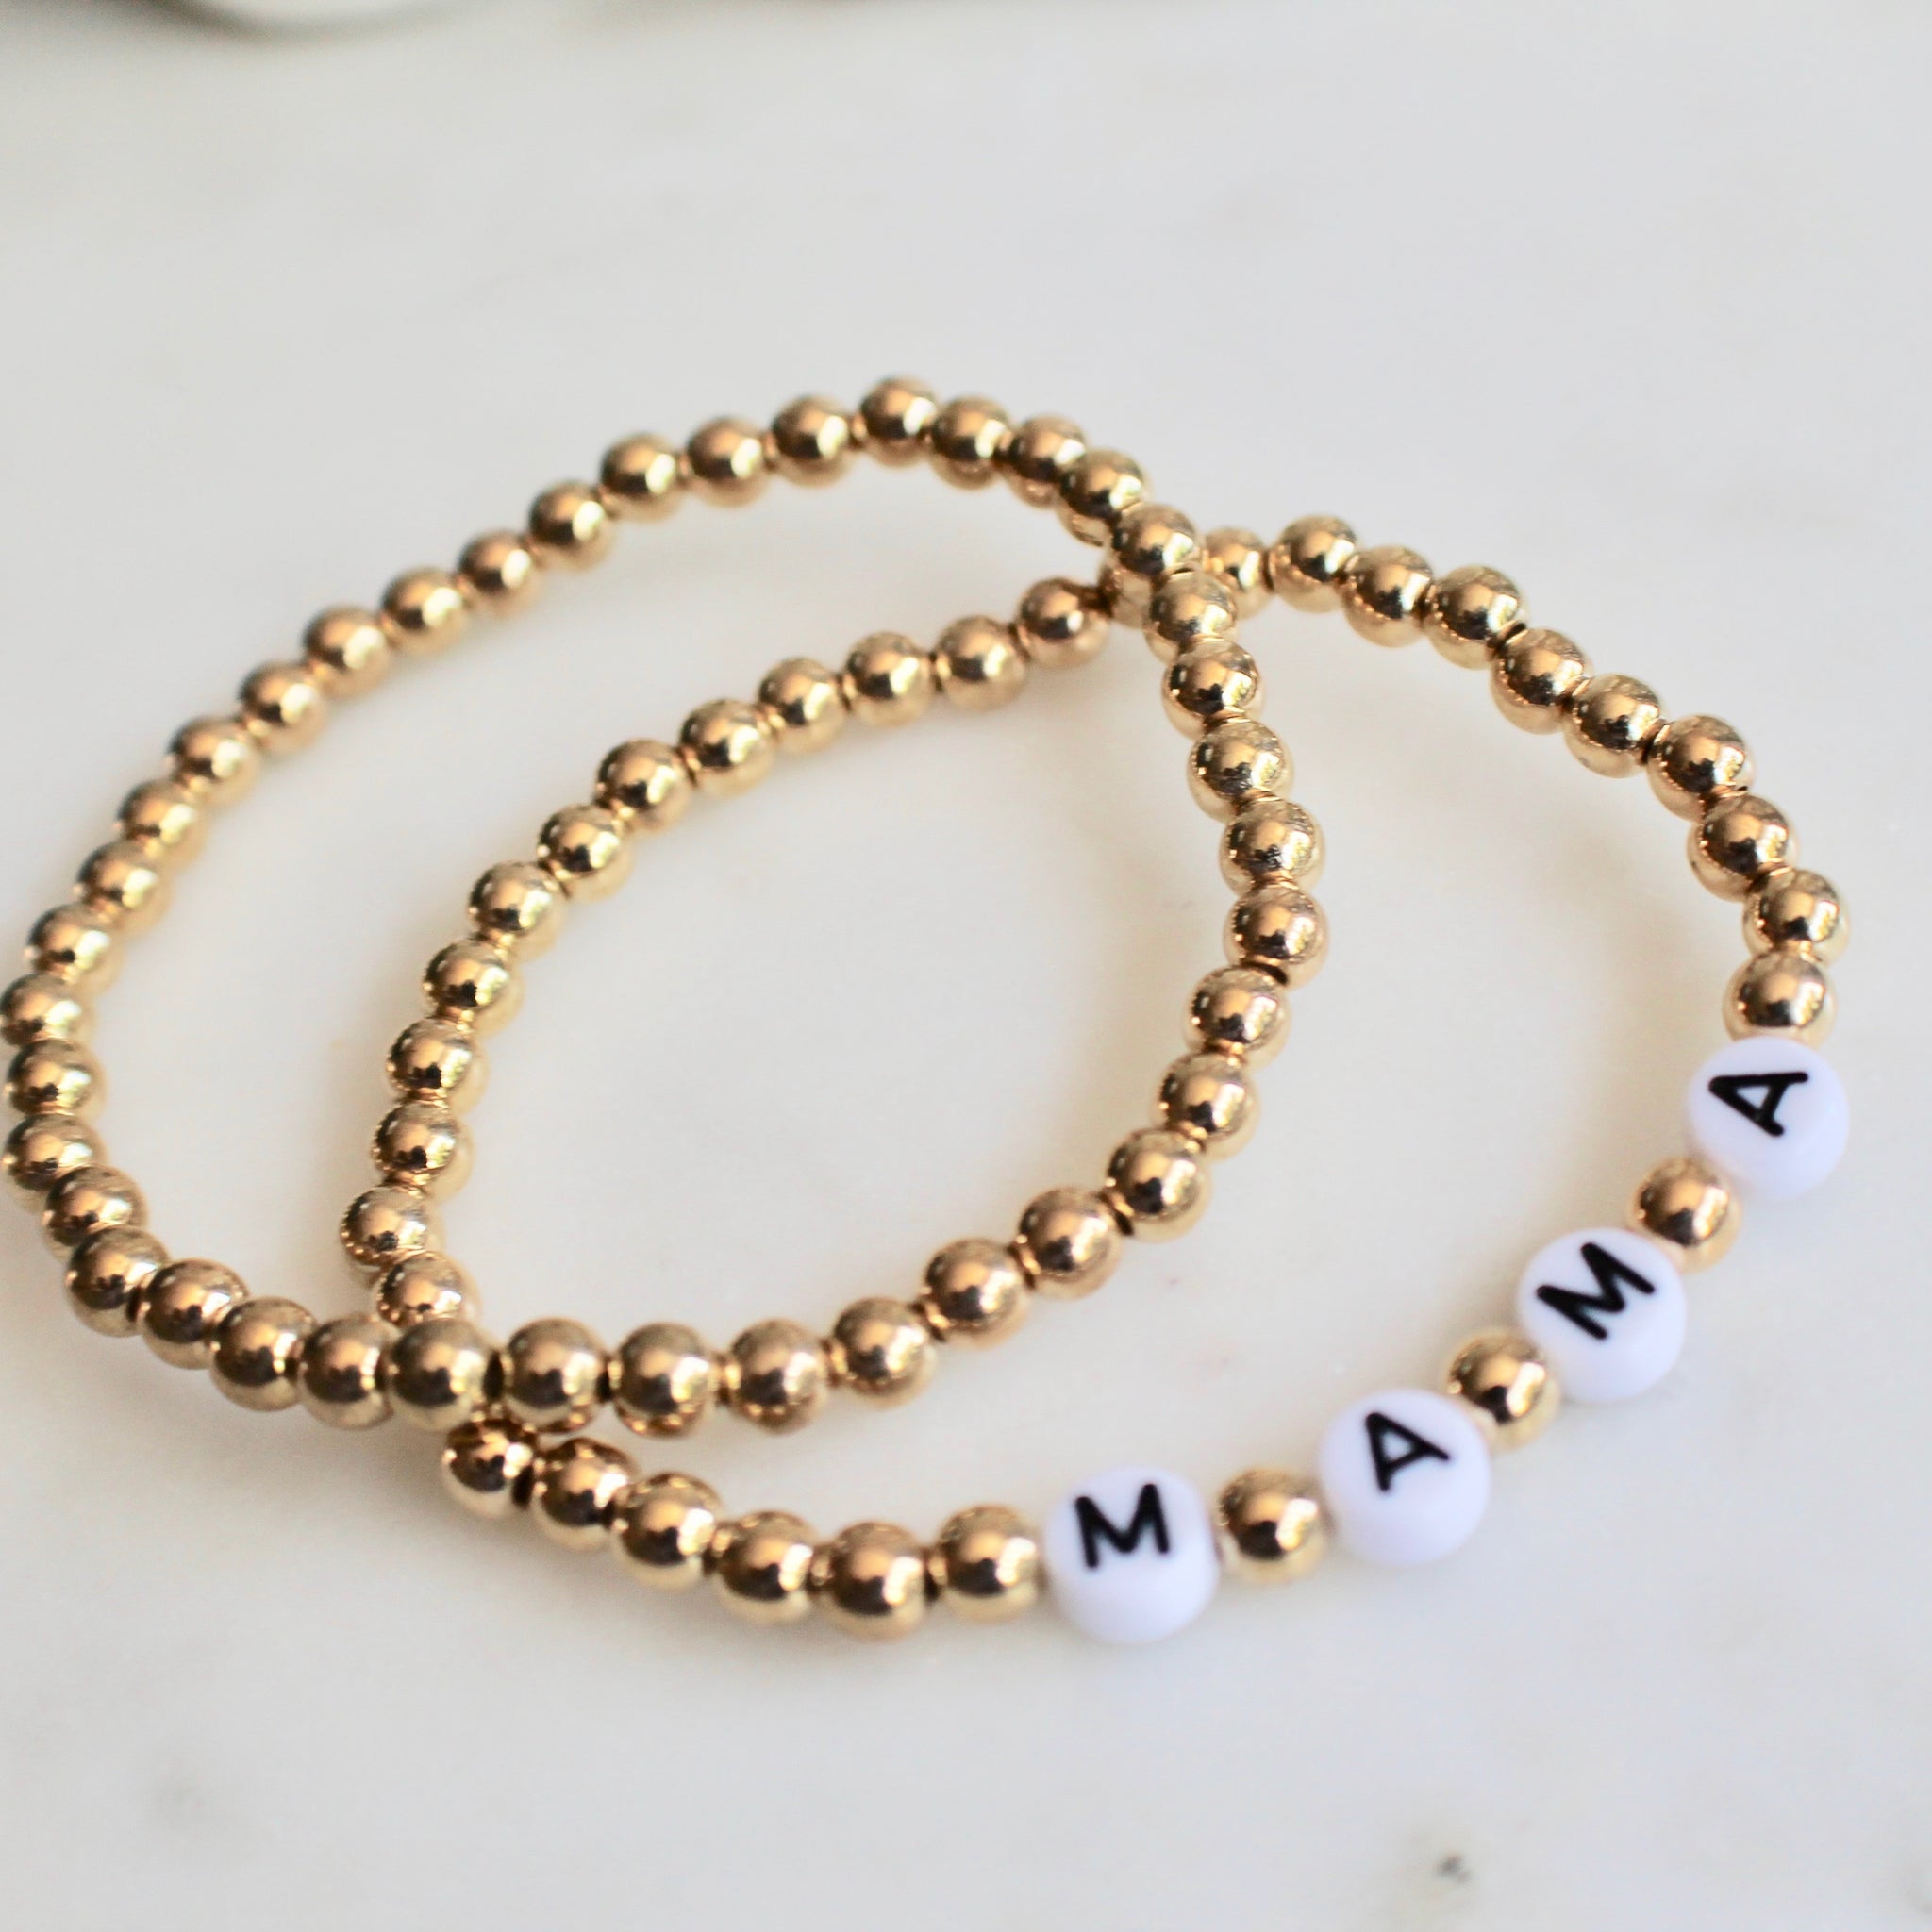 Mama gold bracelet